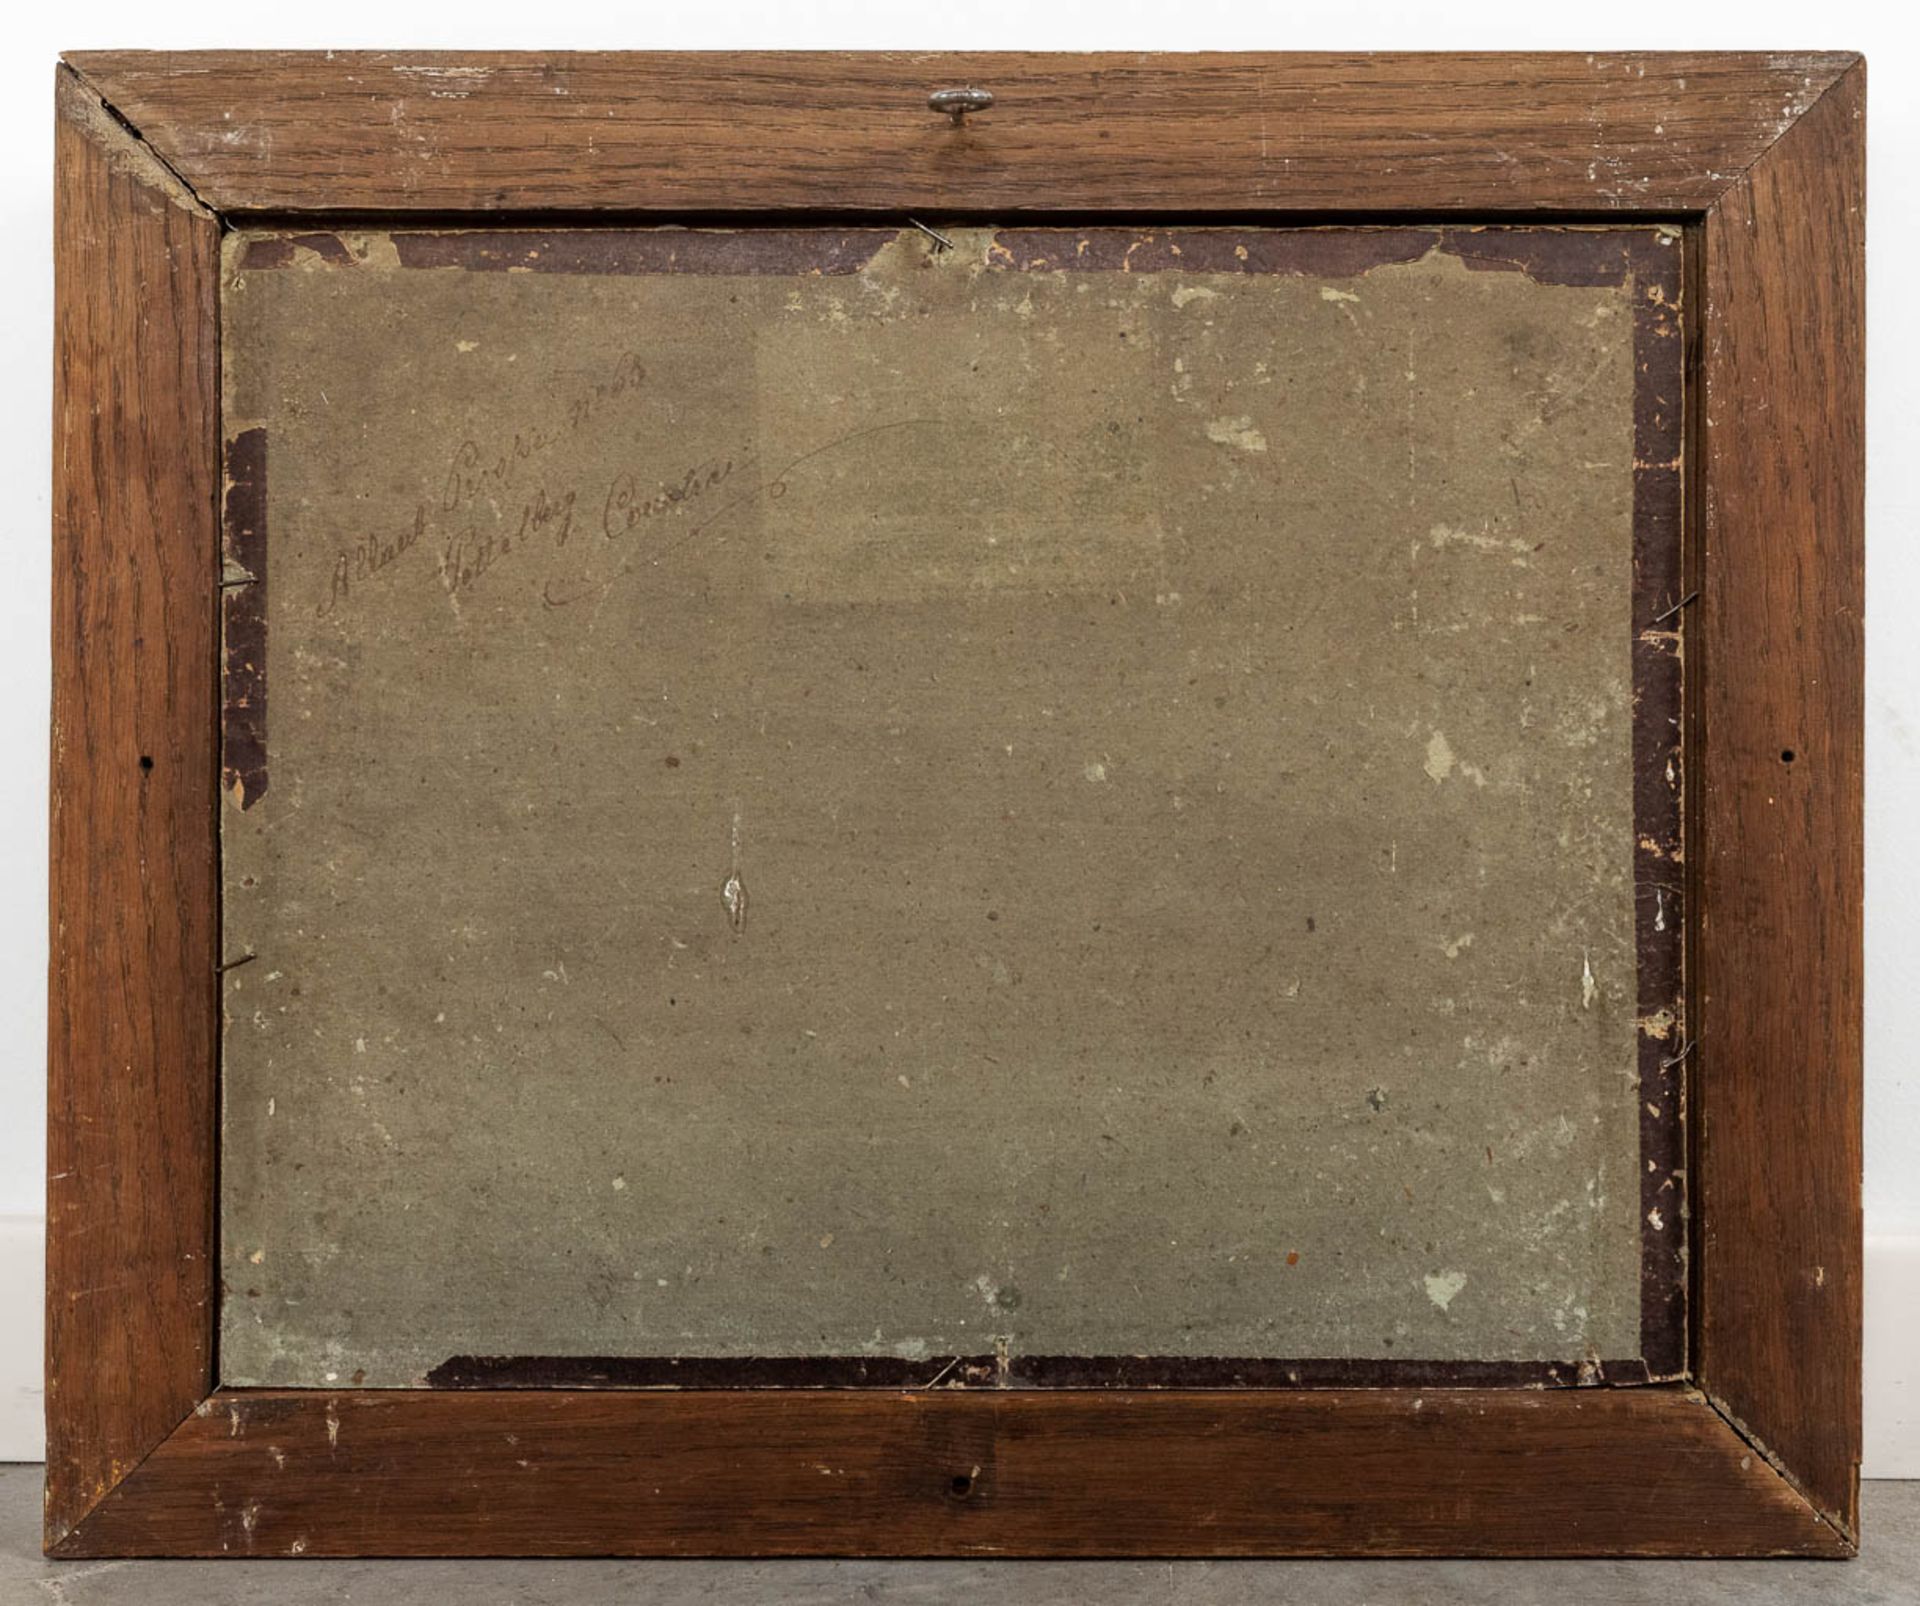 Edouard WOUTERMAERTENS (1819-1897) 'Ram' oil on board. (W: 38 x H: 30 cm) - Image 6 of 7